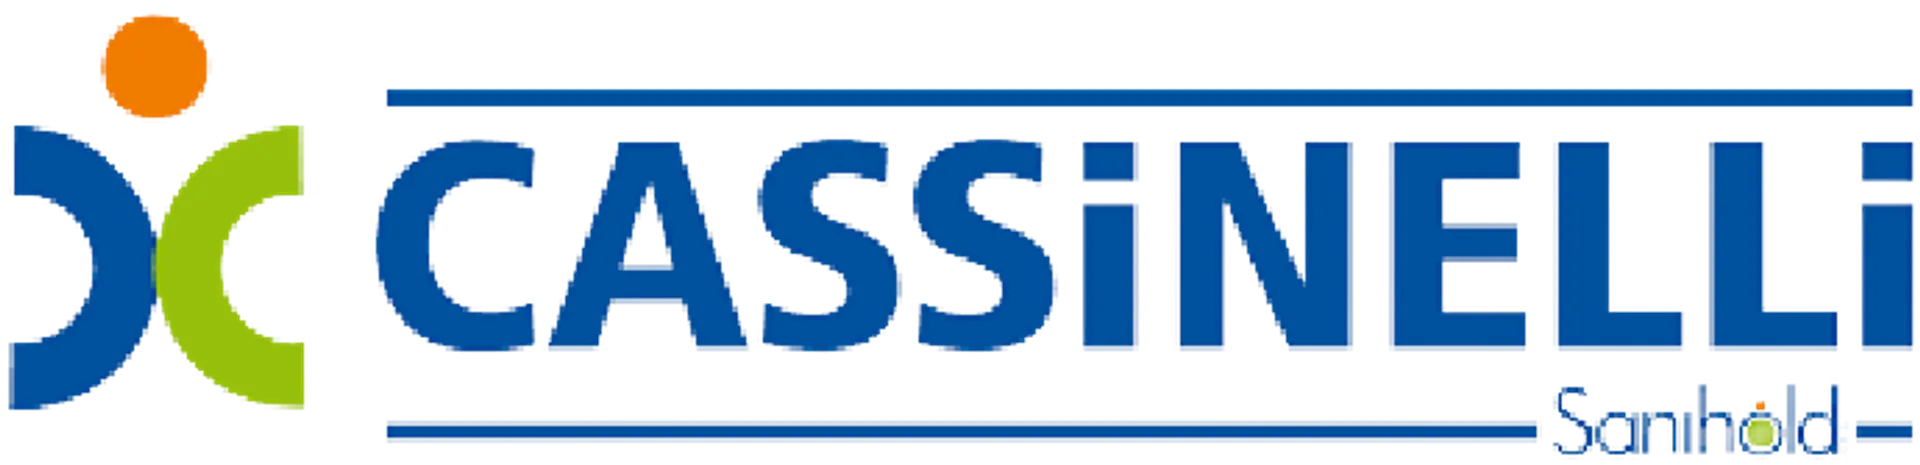 CASSINELLI logo